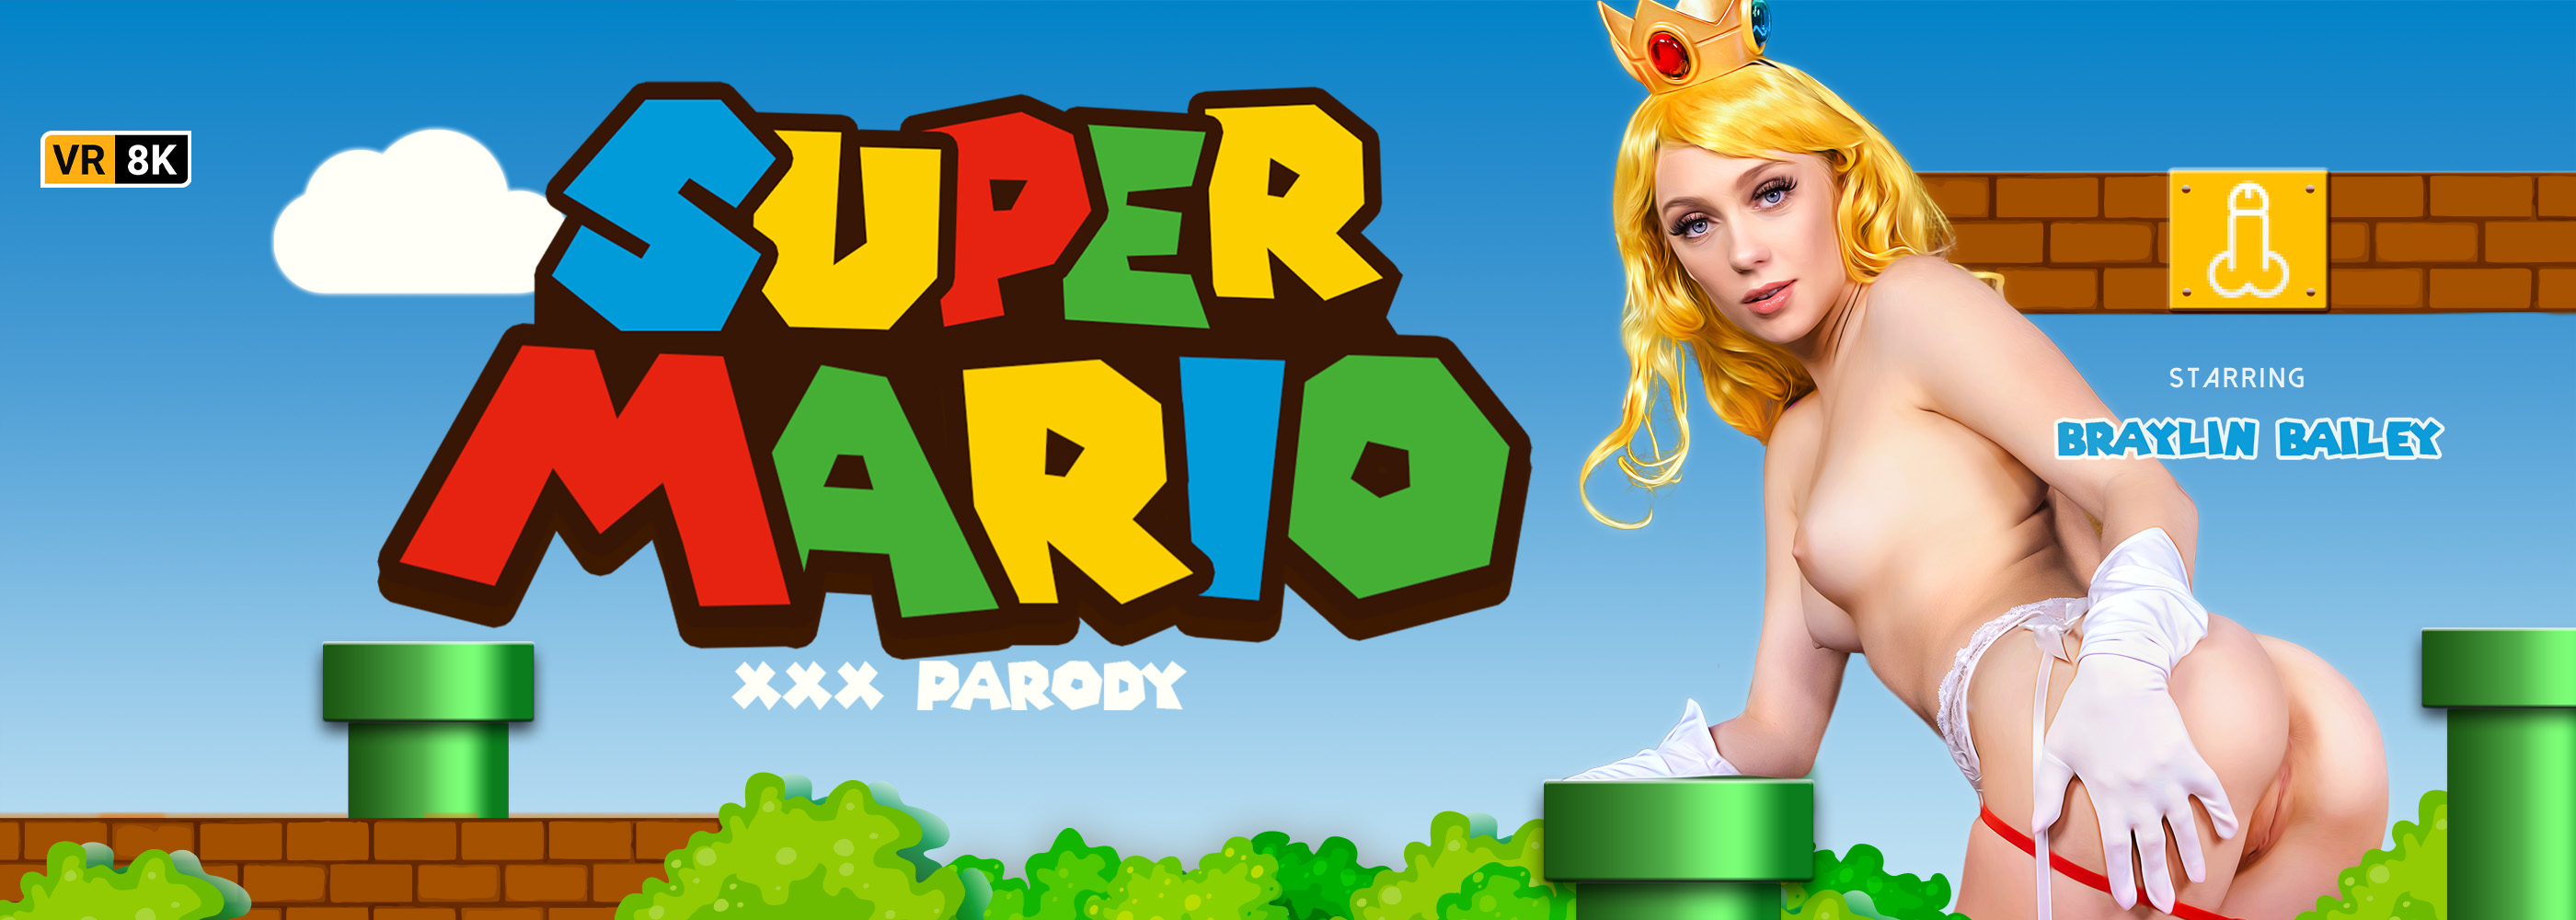 Super Mario (A Porn Parody) - VR Porn Video, Starring: Braylin Bailey VR